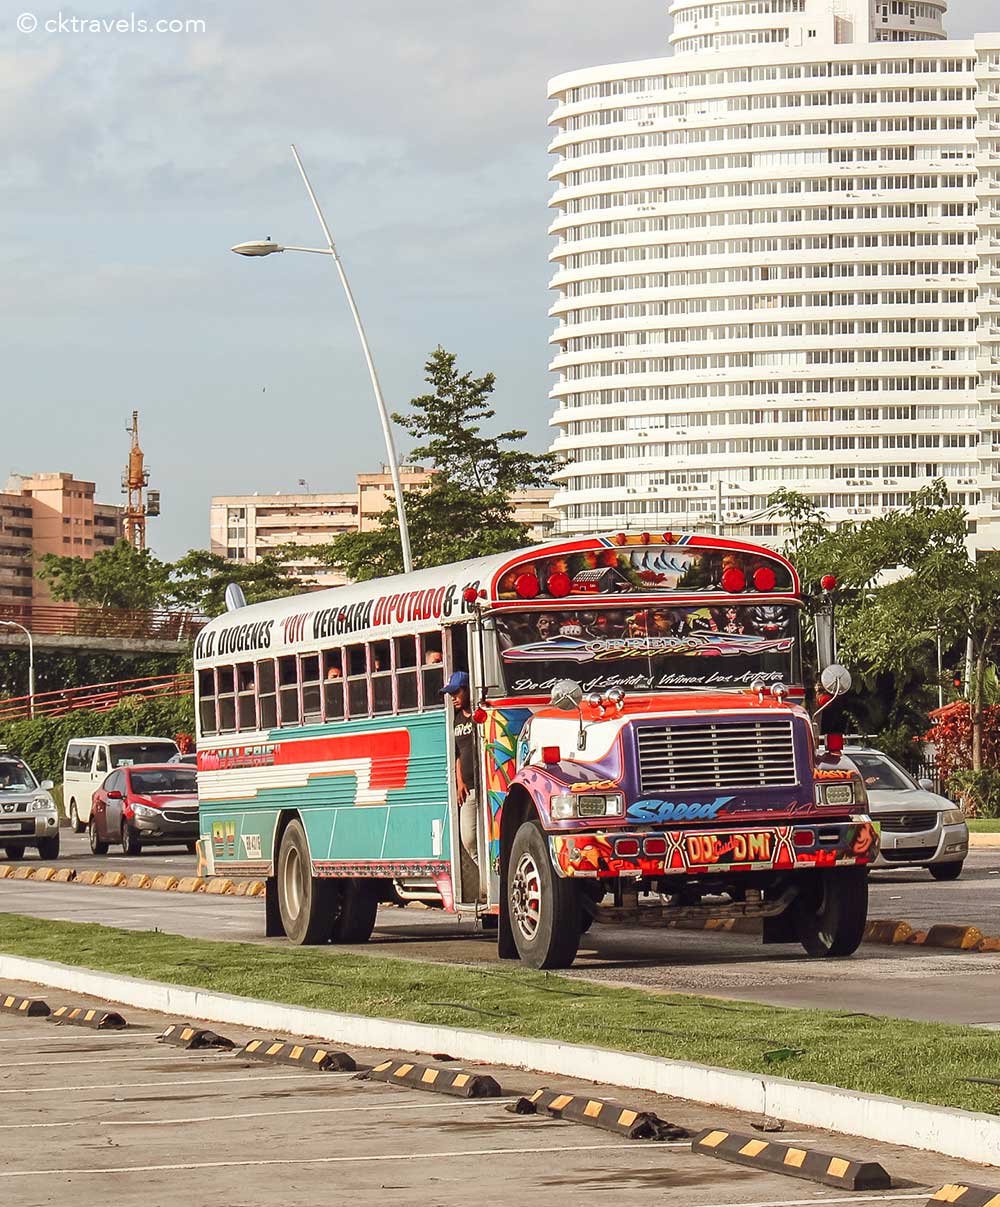 Diablo Rojo (Red Devil) bus Panama City